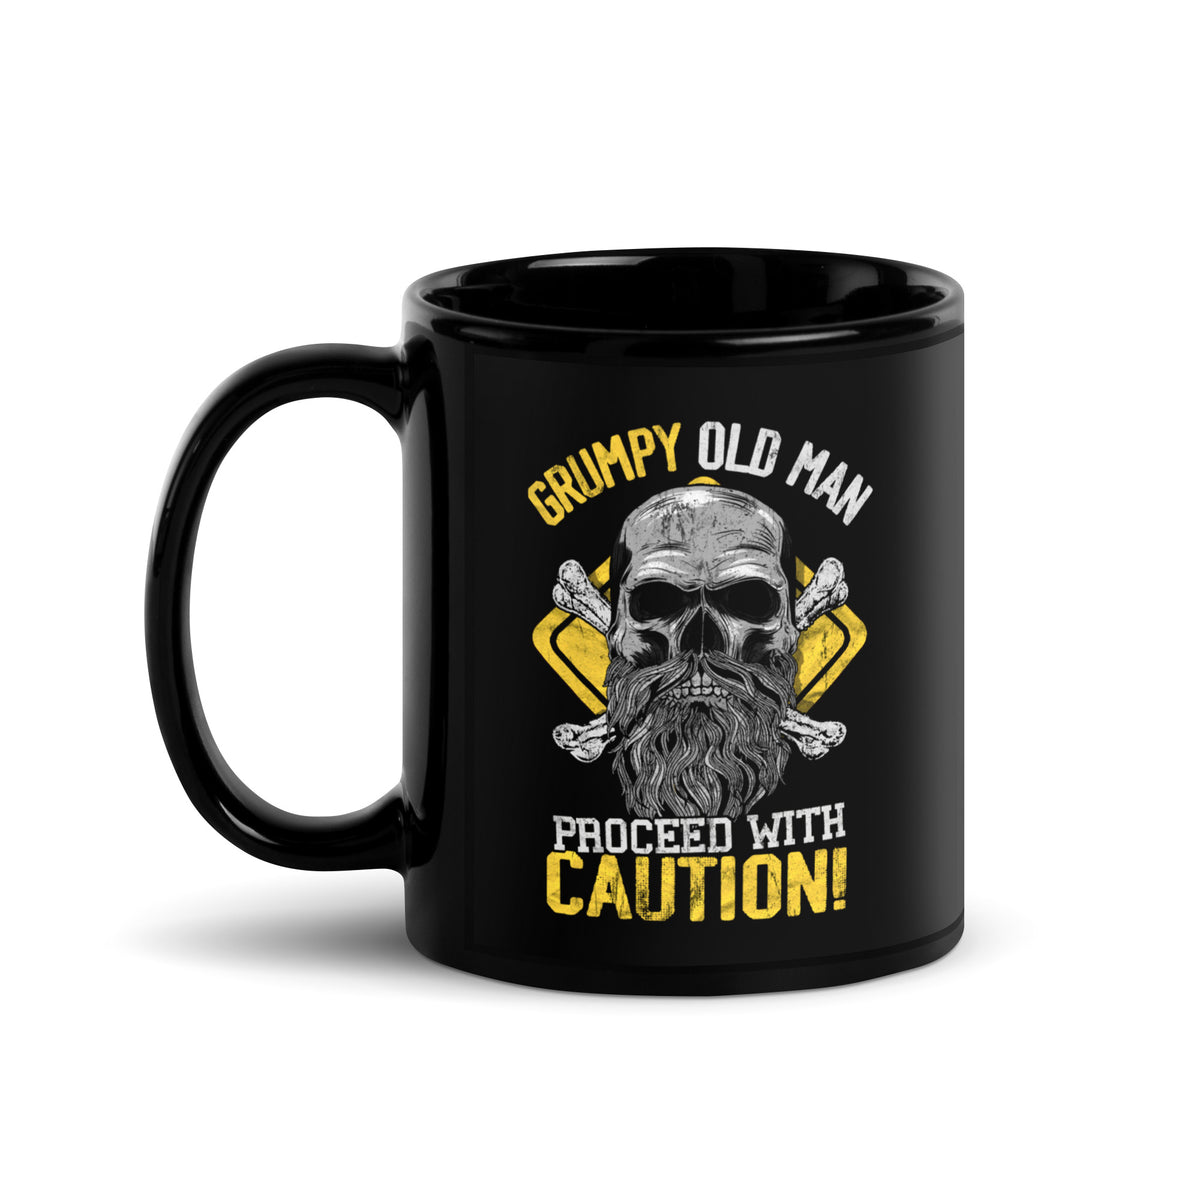 Caution: Grumpy Old Man Mug